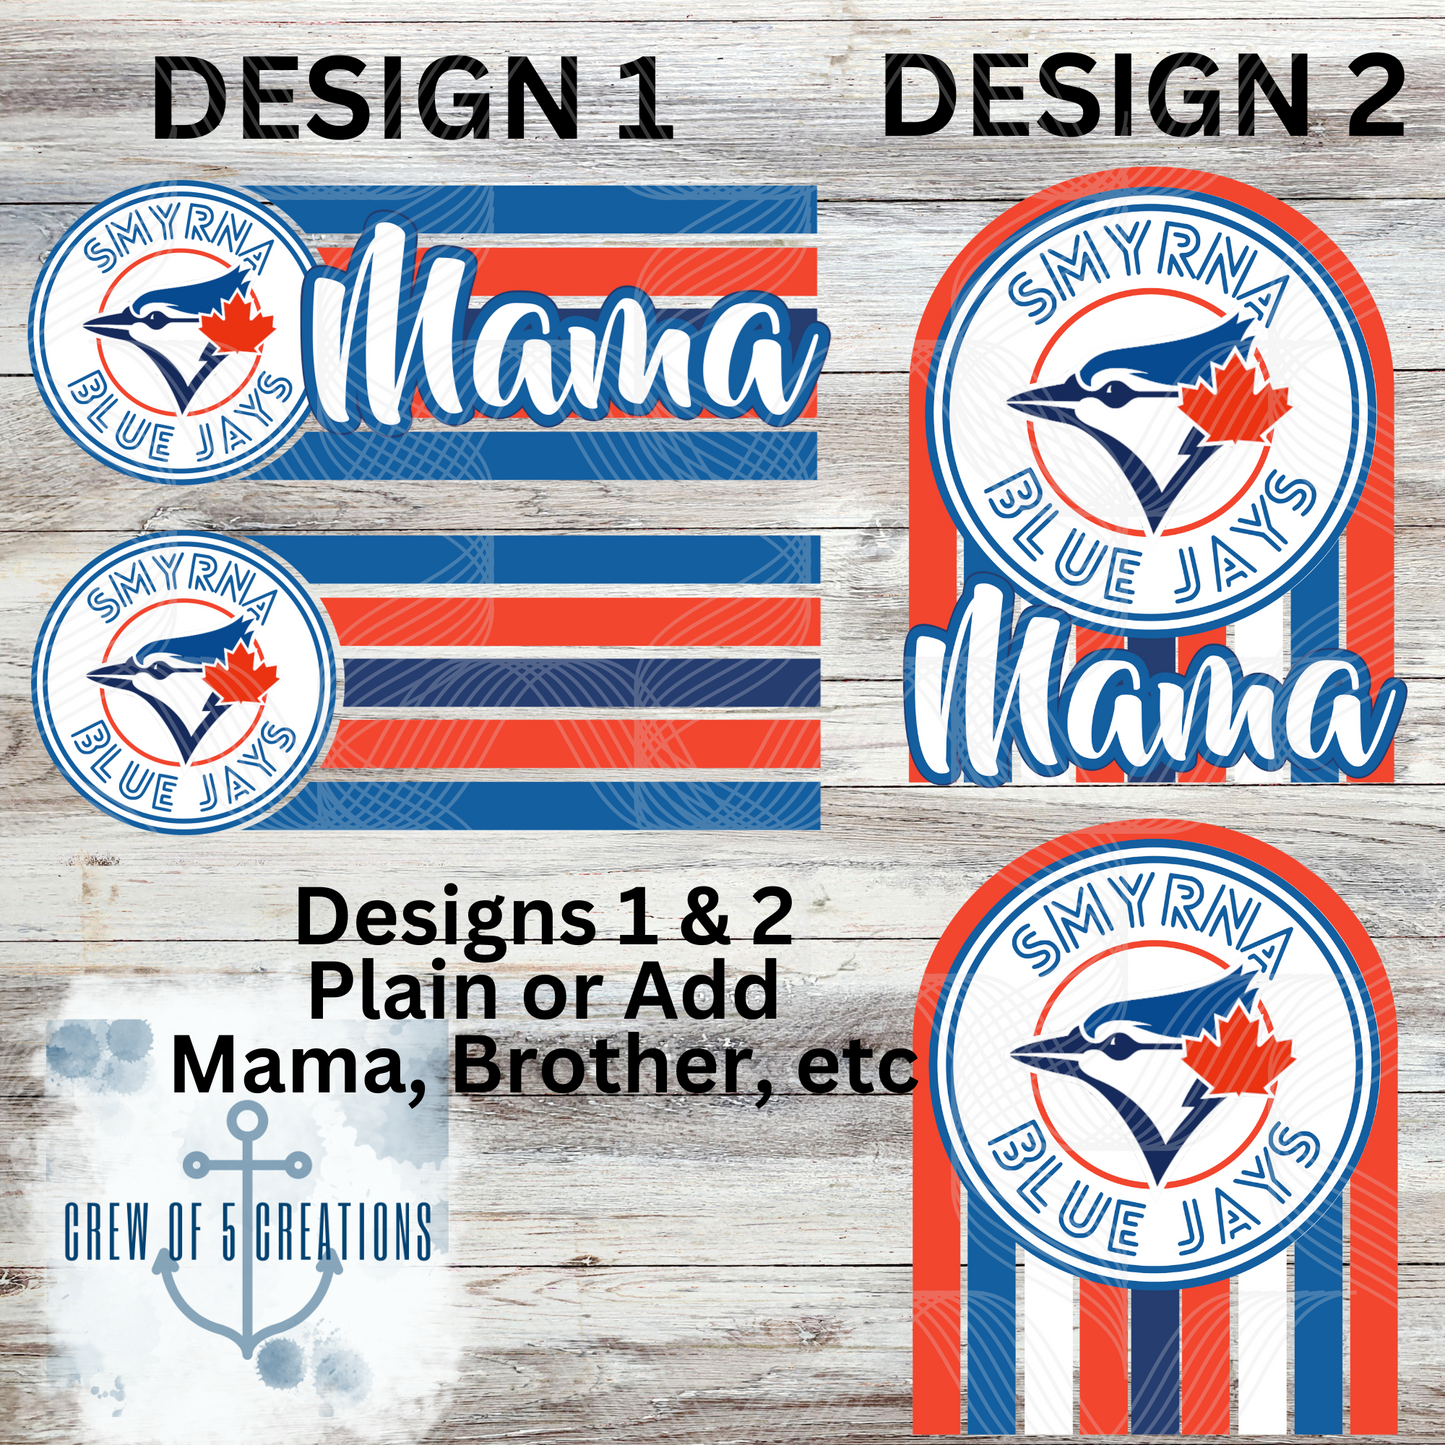 Smyrna Blue Jays (6 Design Options)